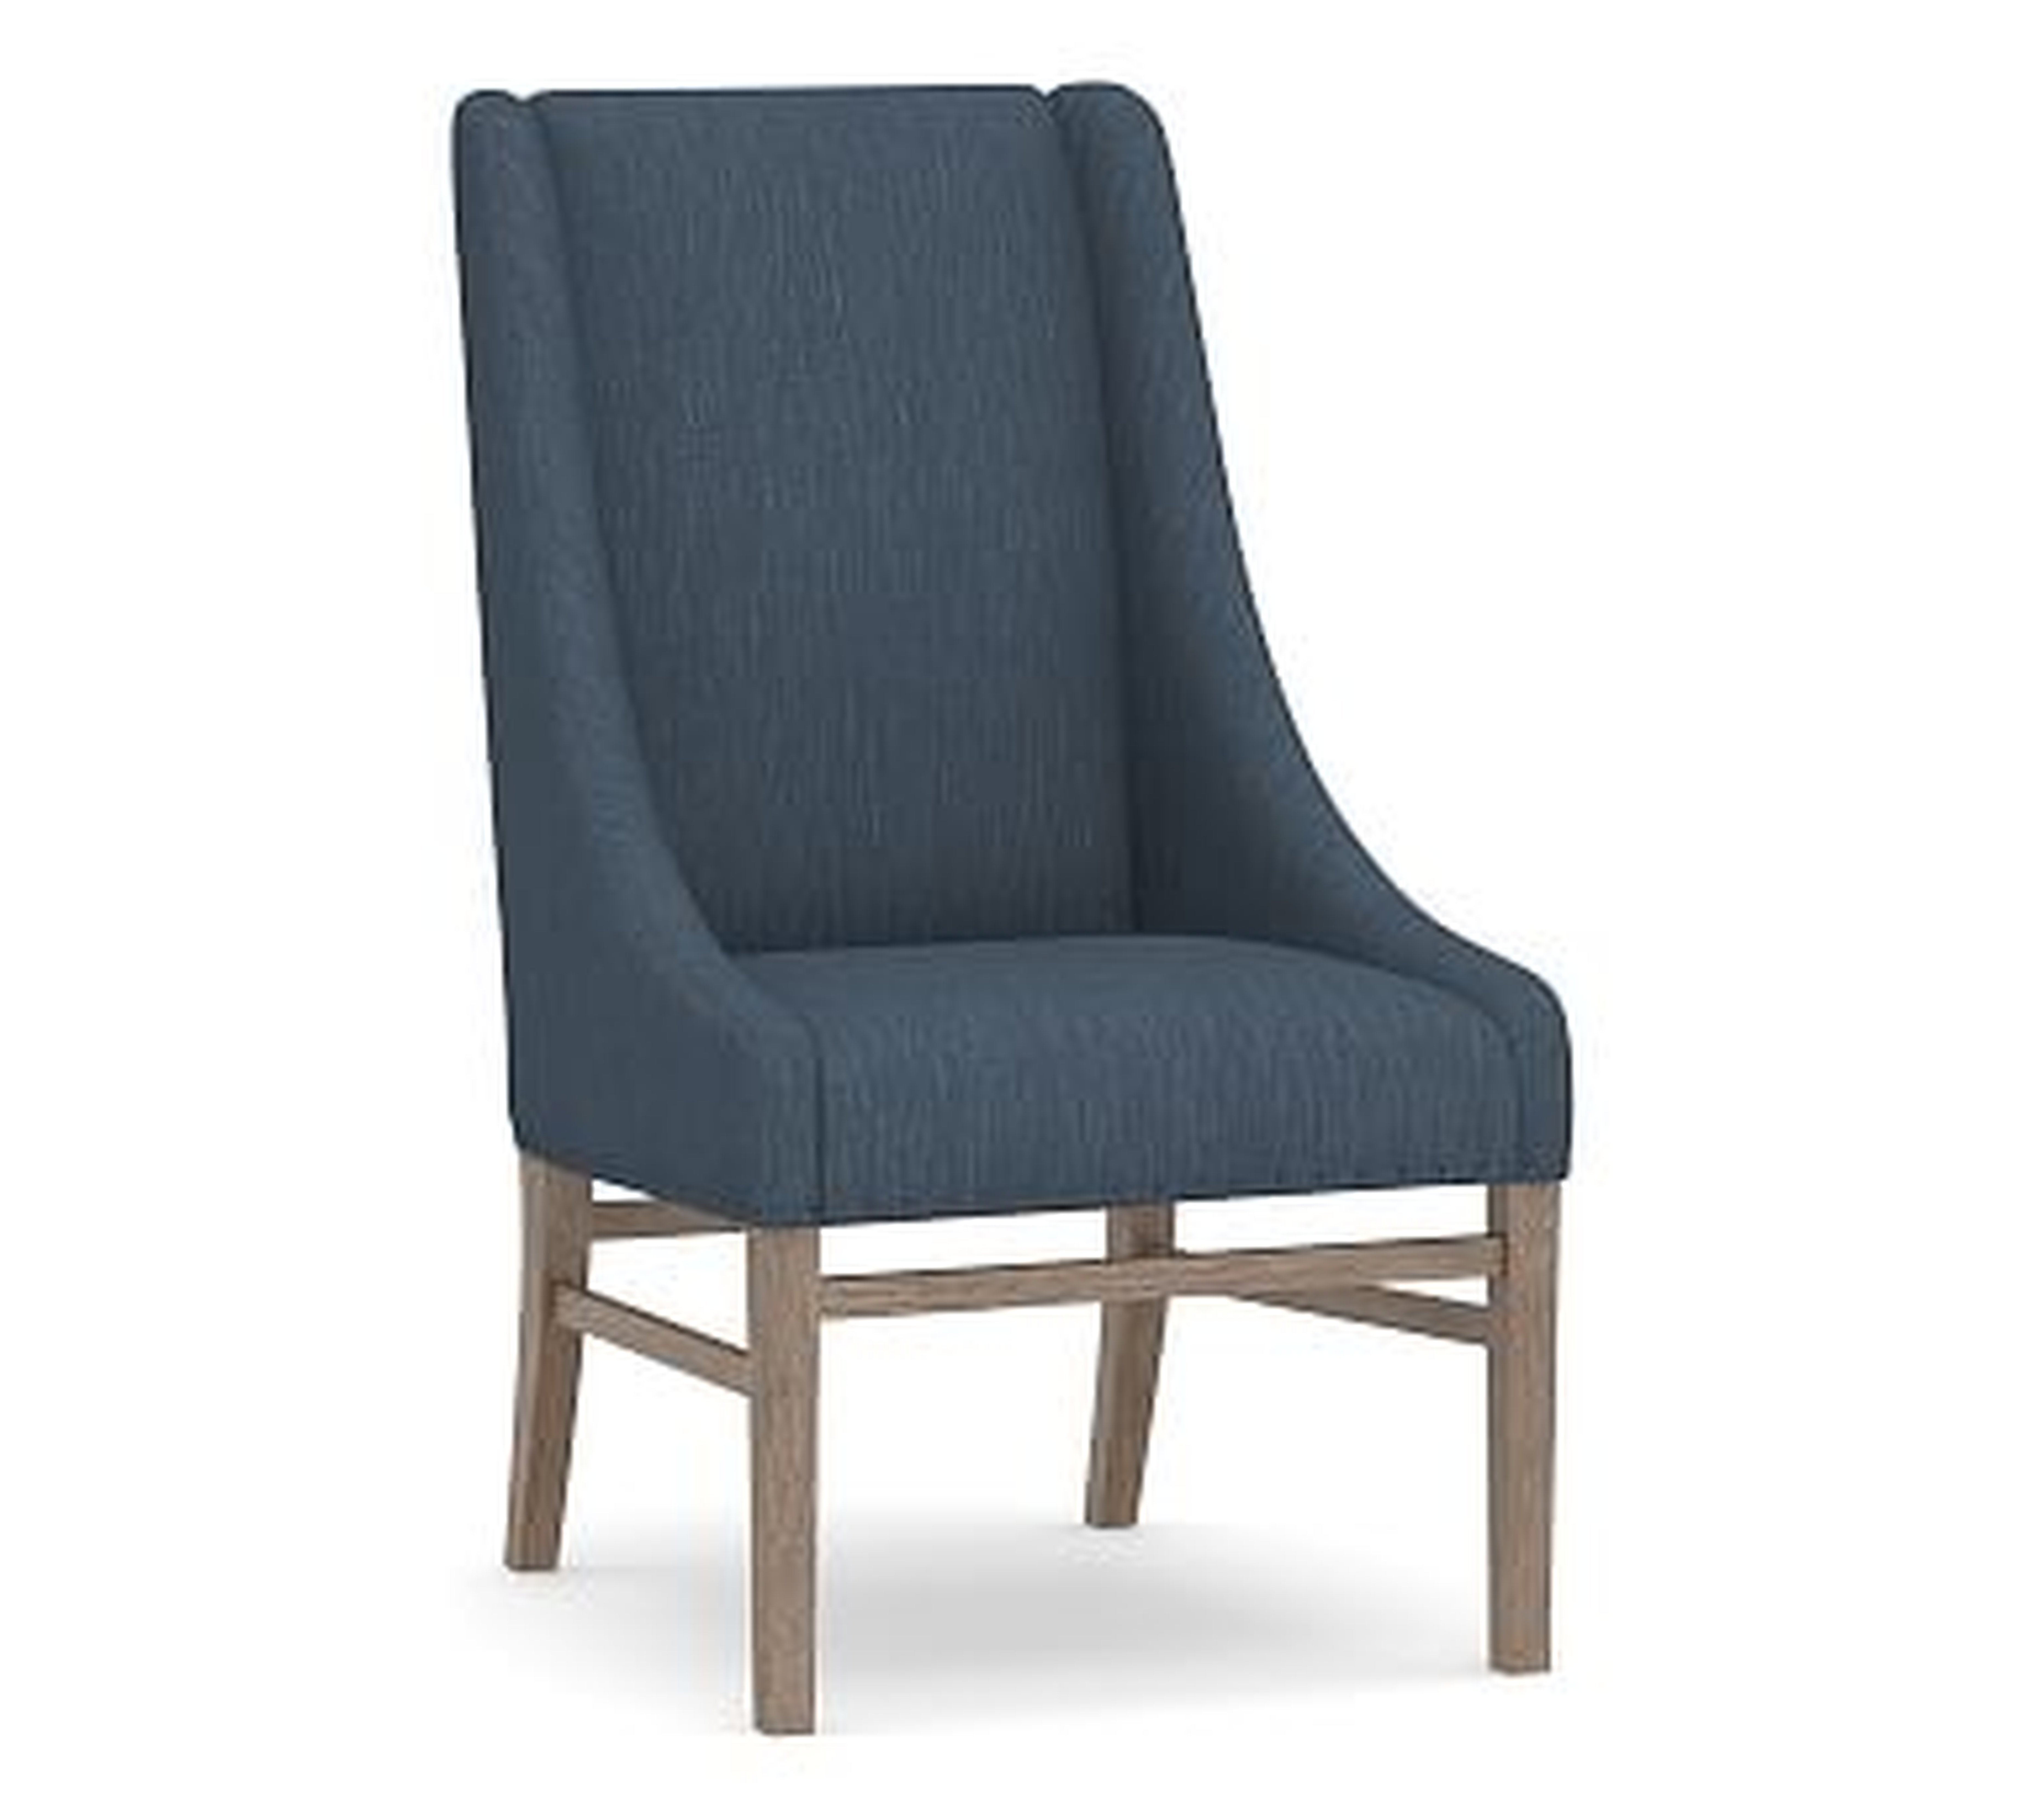 Milan Slope Arm Upholstered Dining Side Chair, Gray Wash Leg, Performance Heathered Tweed Indigo - Pottery Barn